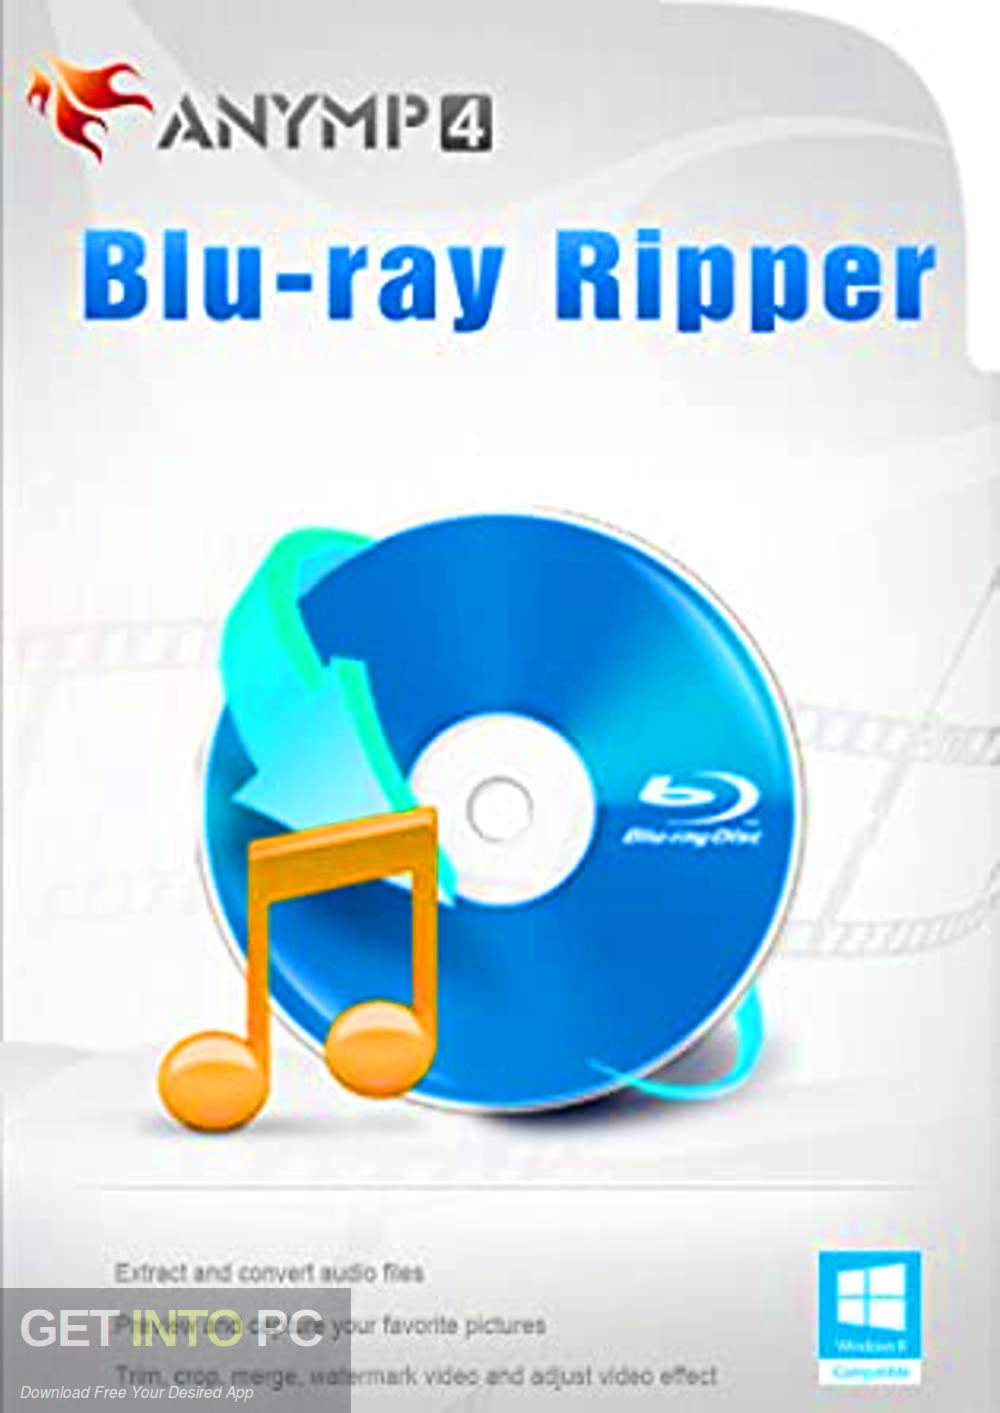 free instal AnyMP4 Blu-ray Player 6.5.52